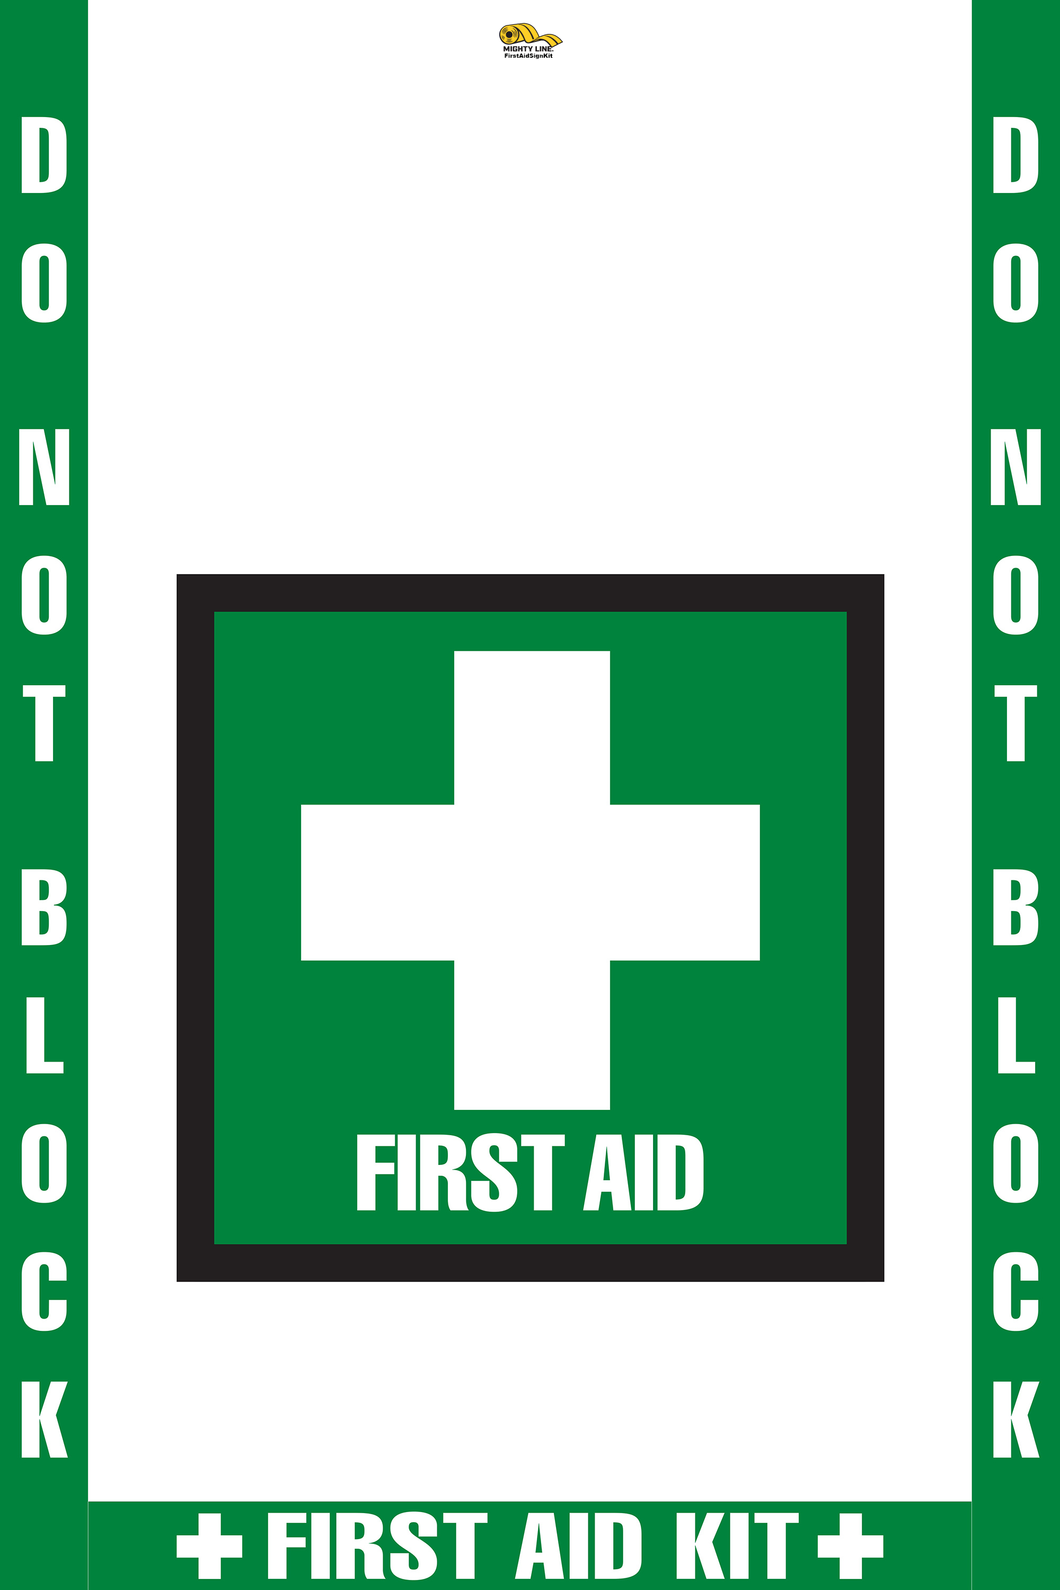 Do Not Block First Aid Floor Marking, OSHA Compliance Kit. 16